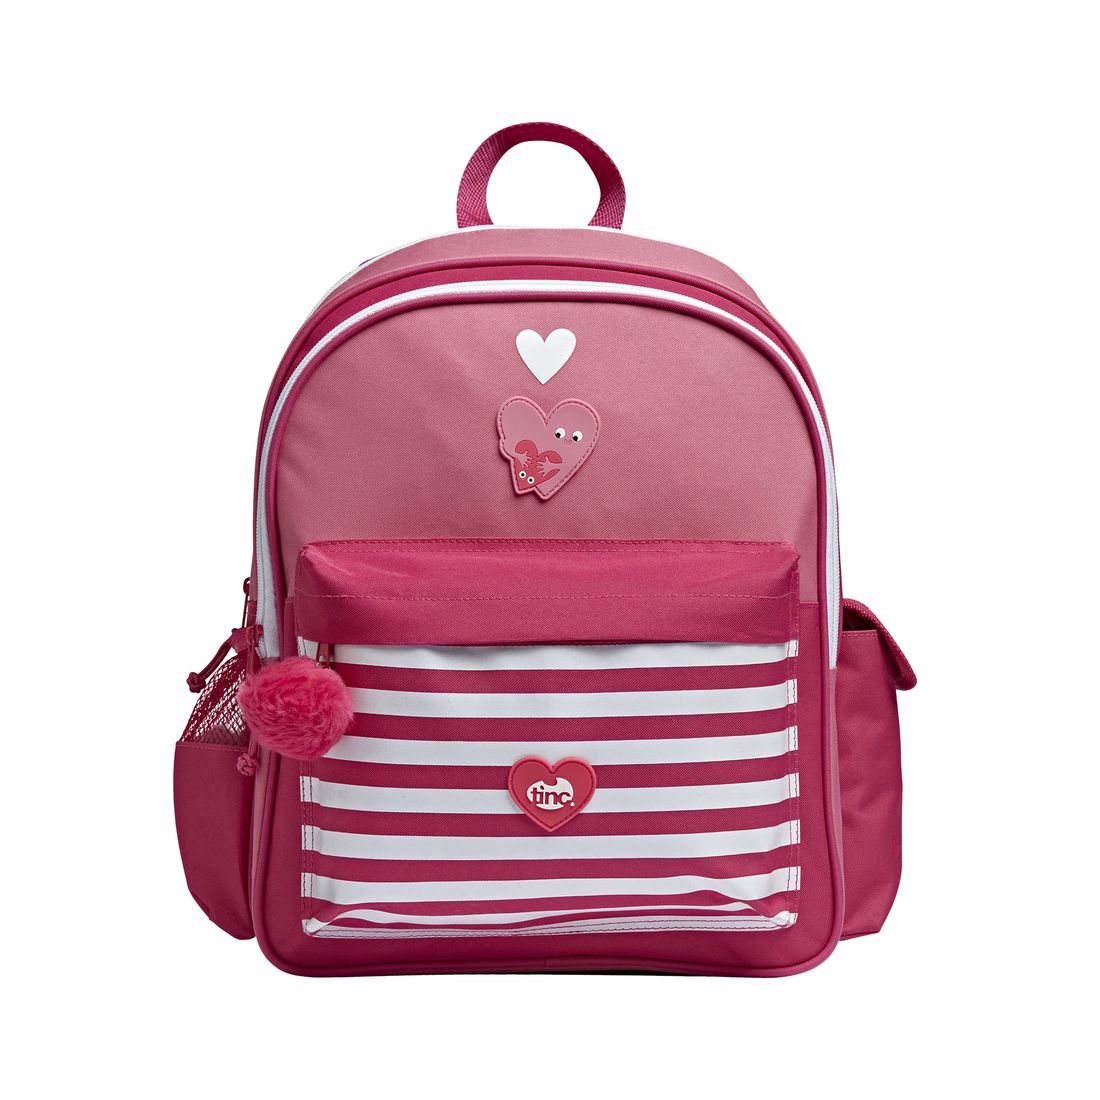 Tinc Lovely Mallo Junior Backpack - Pink